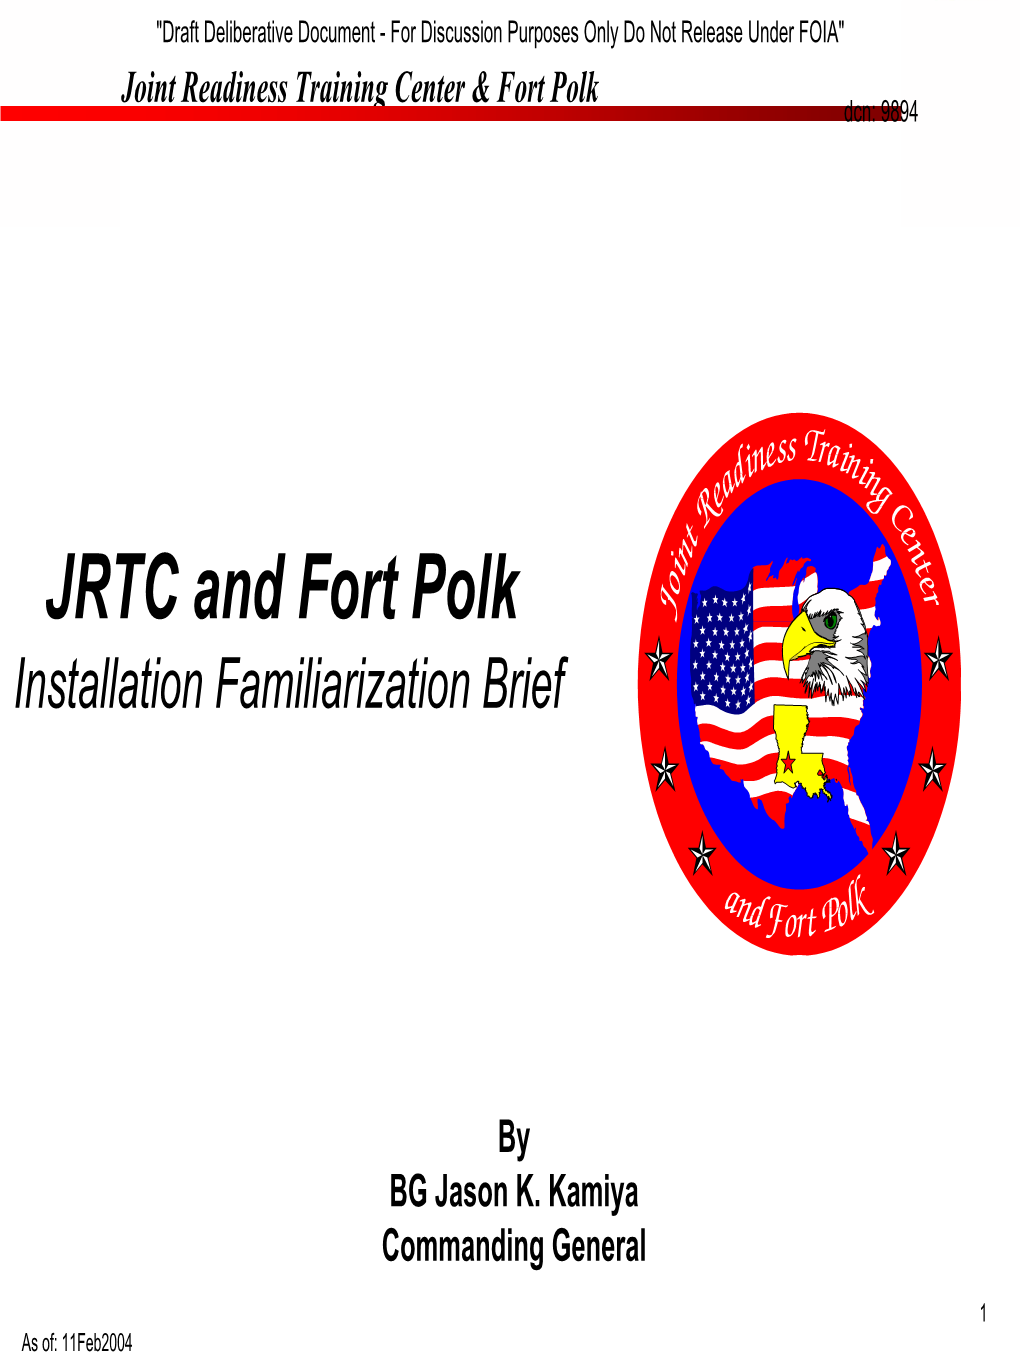 JRTC and Fort Polk Installation Familiarization Brief